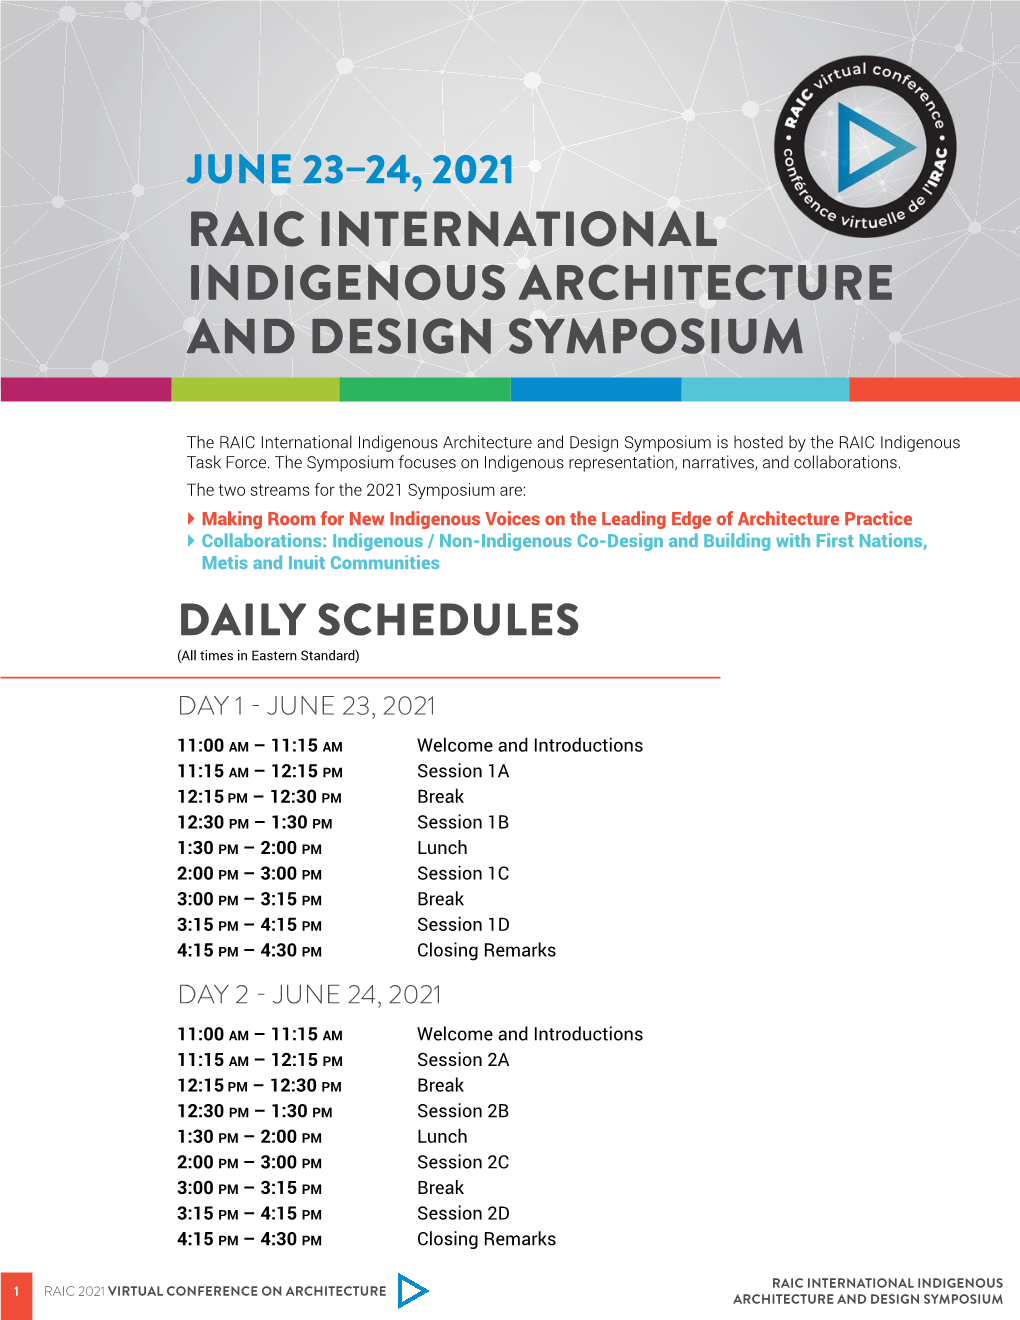 Raic International Indigenous Architecture and Design Symposium